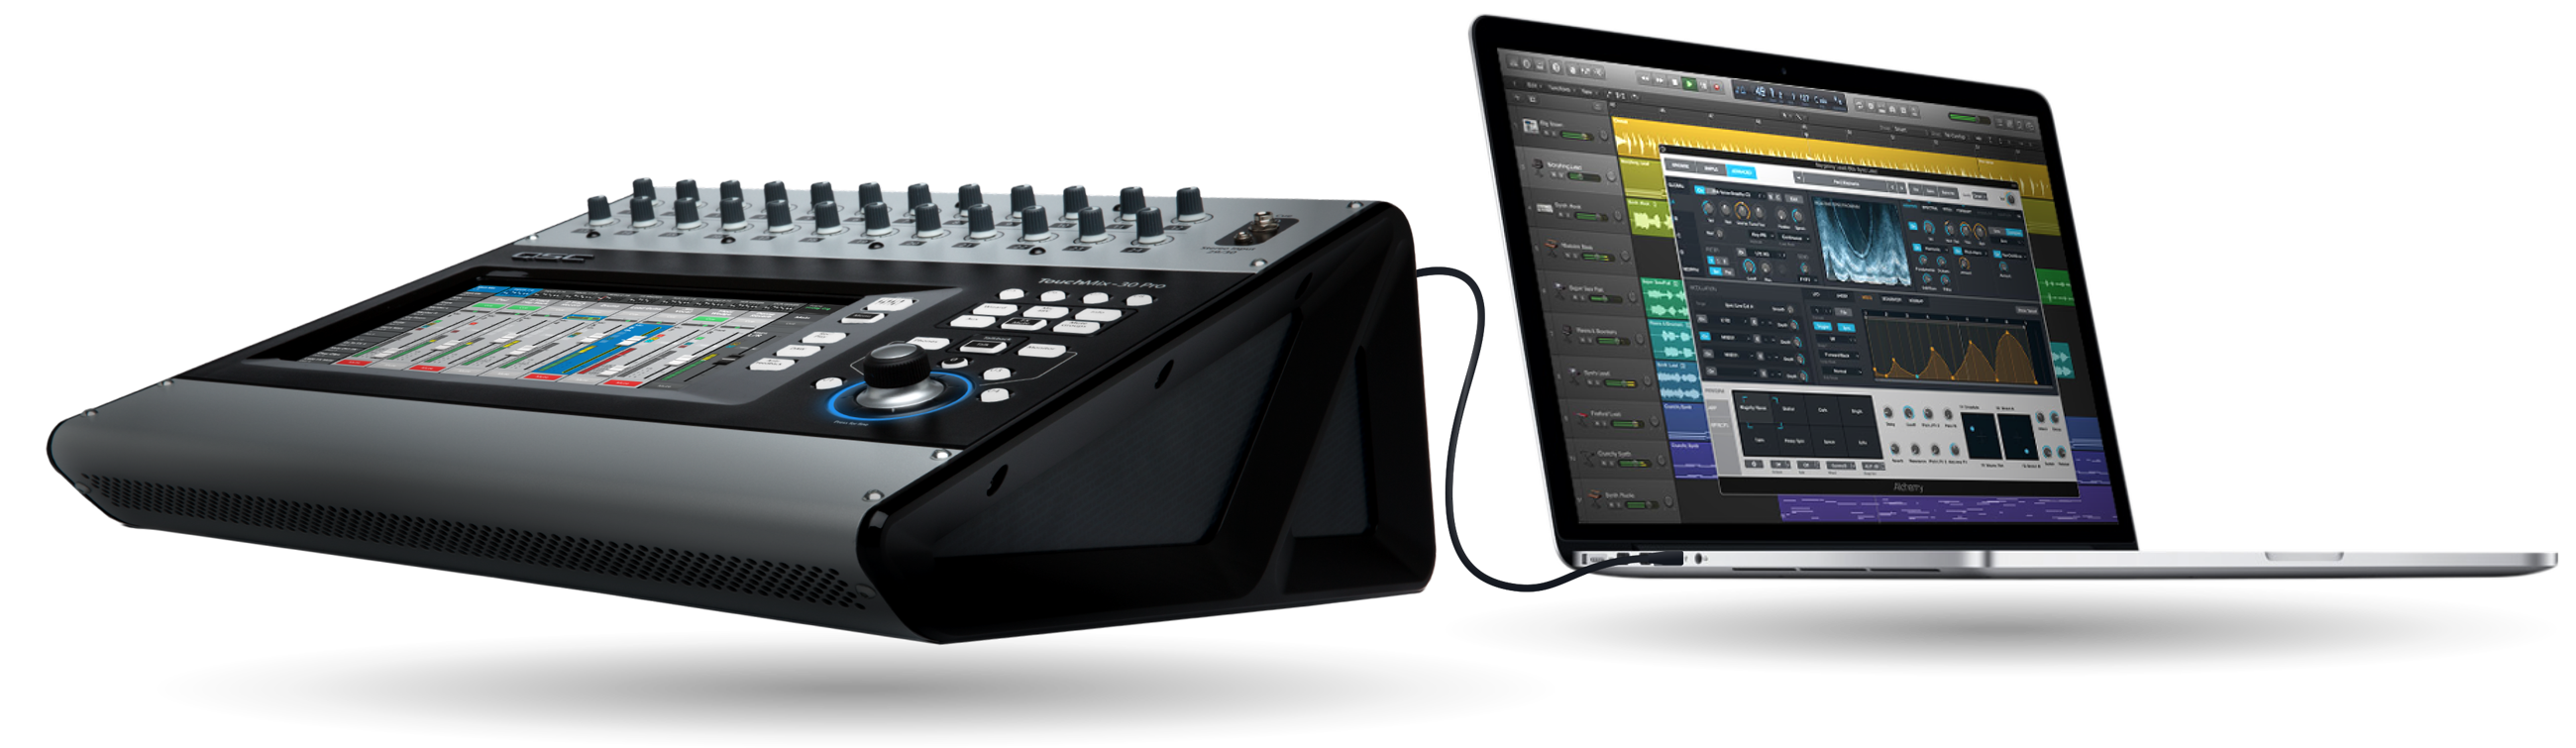 Qsc Touchmix 30 Pro - Digital mixing desk - Variation 4